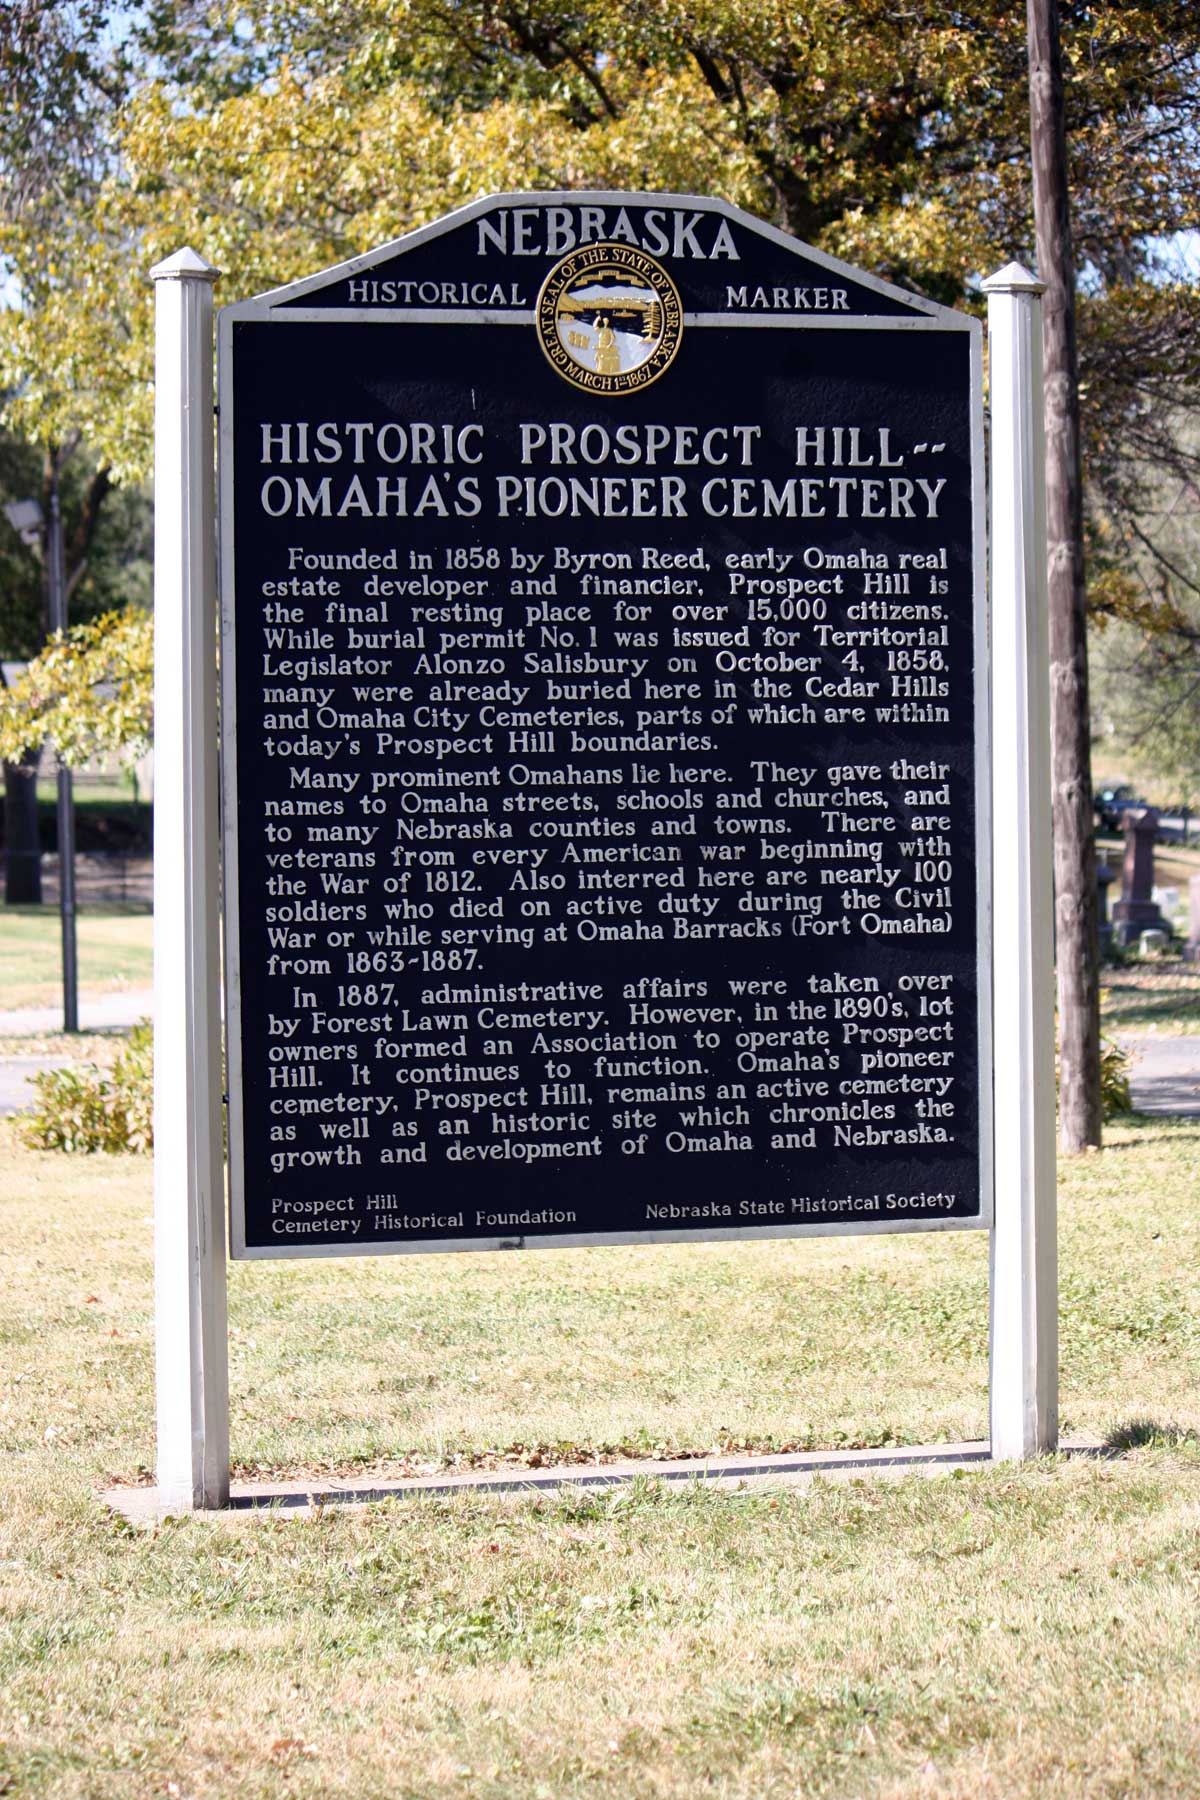 Prospect Hill Historical Marker